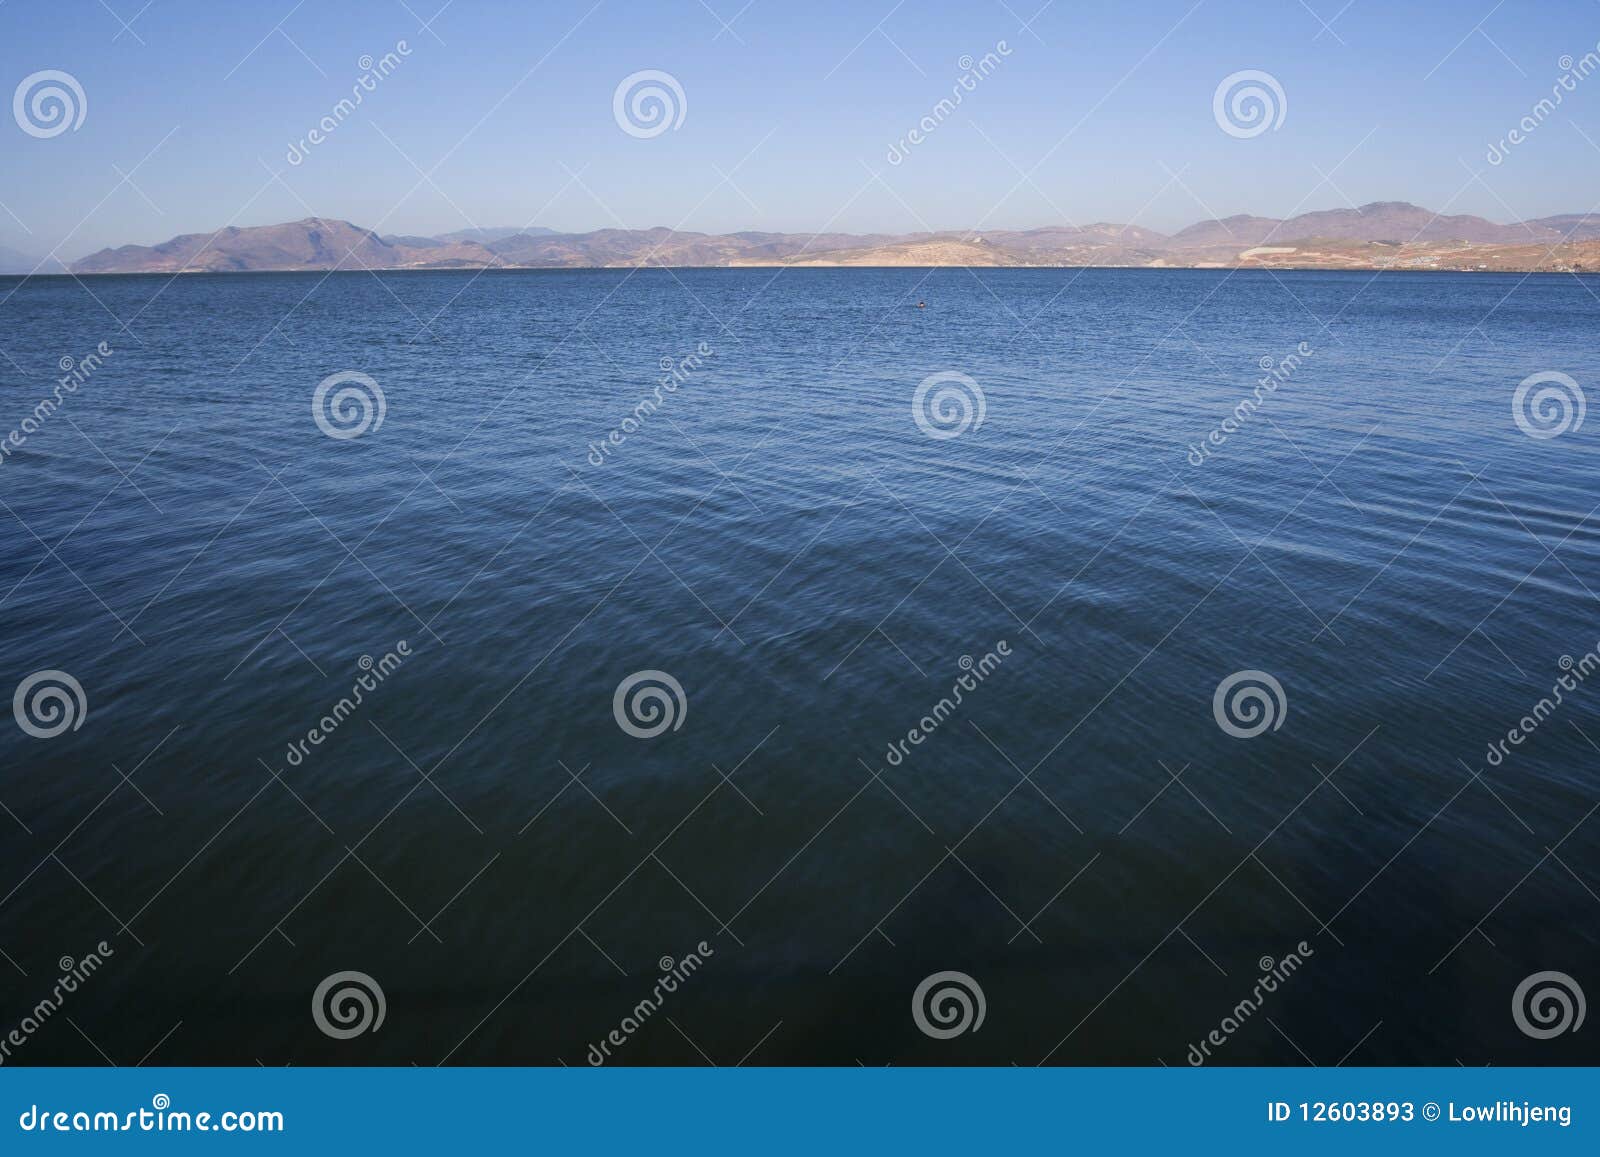 blue lake waters